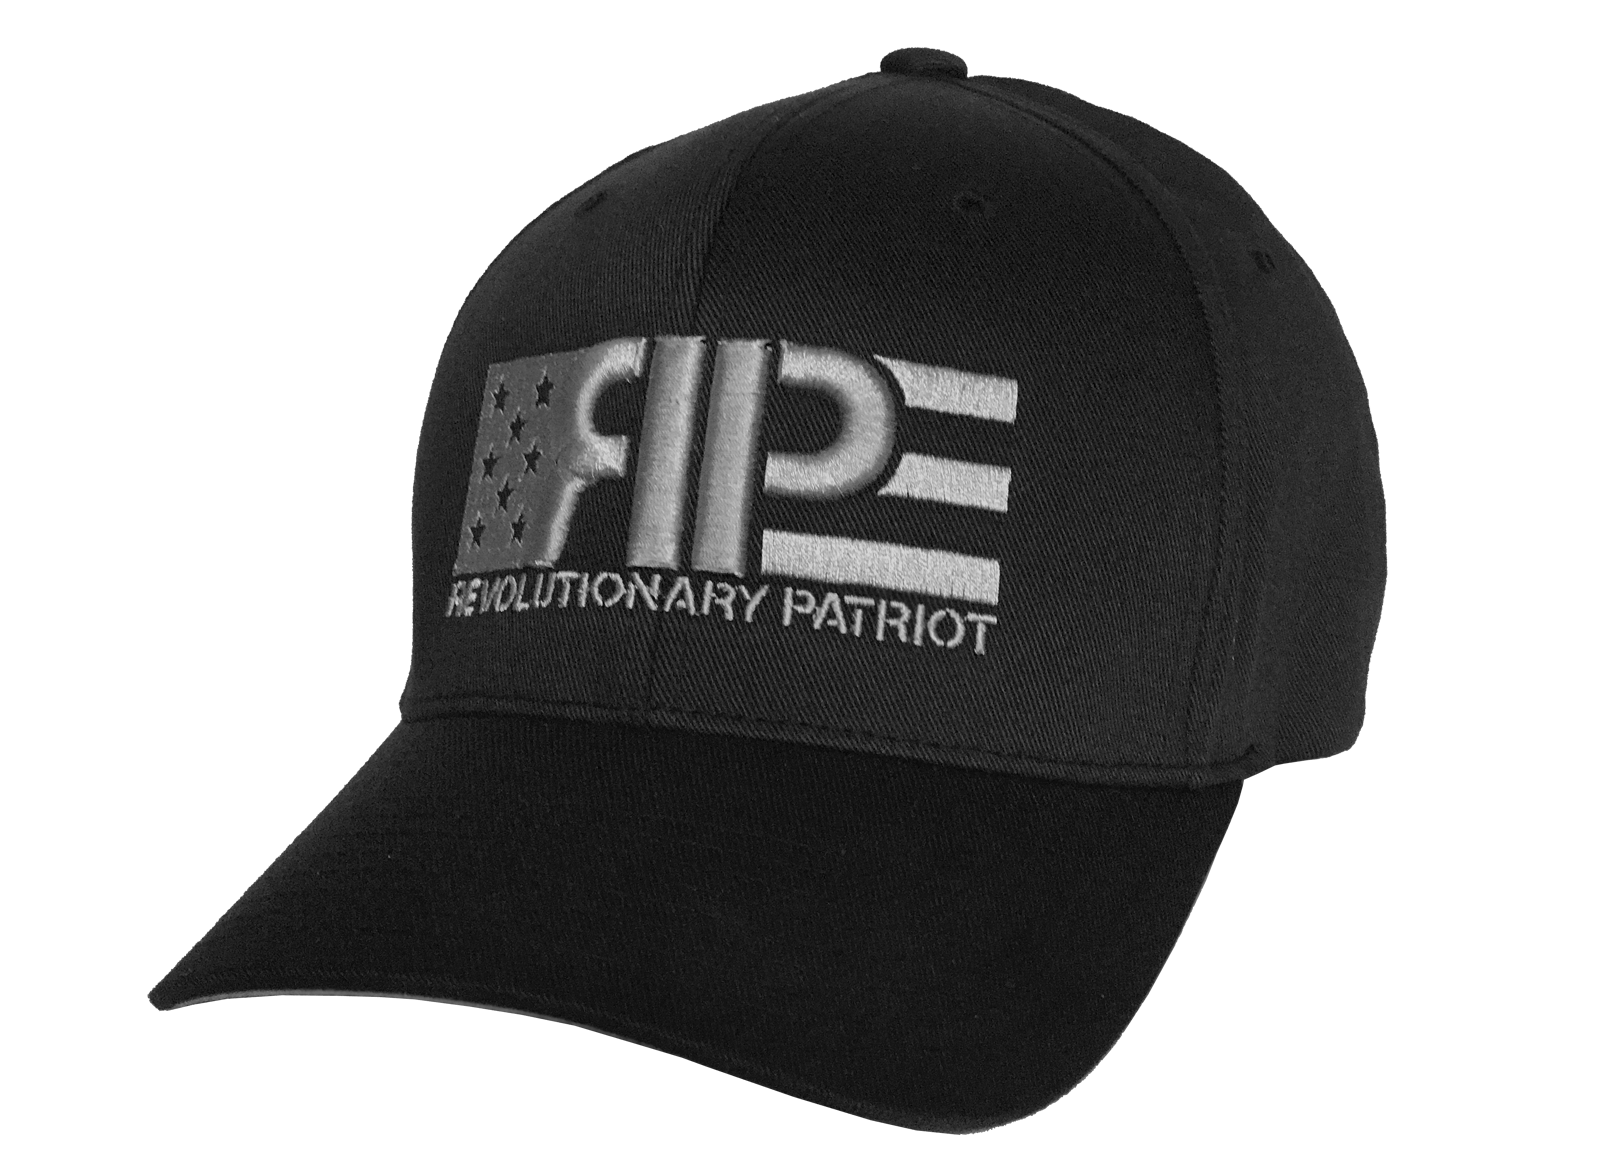 RP Flag Flexfit (Black) - Revolutionary Patriot